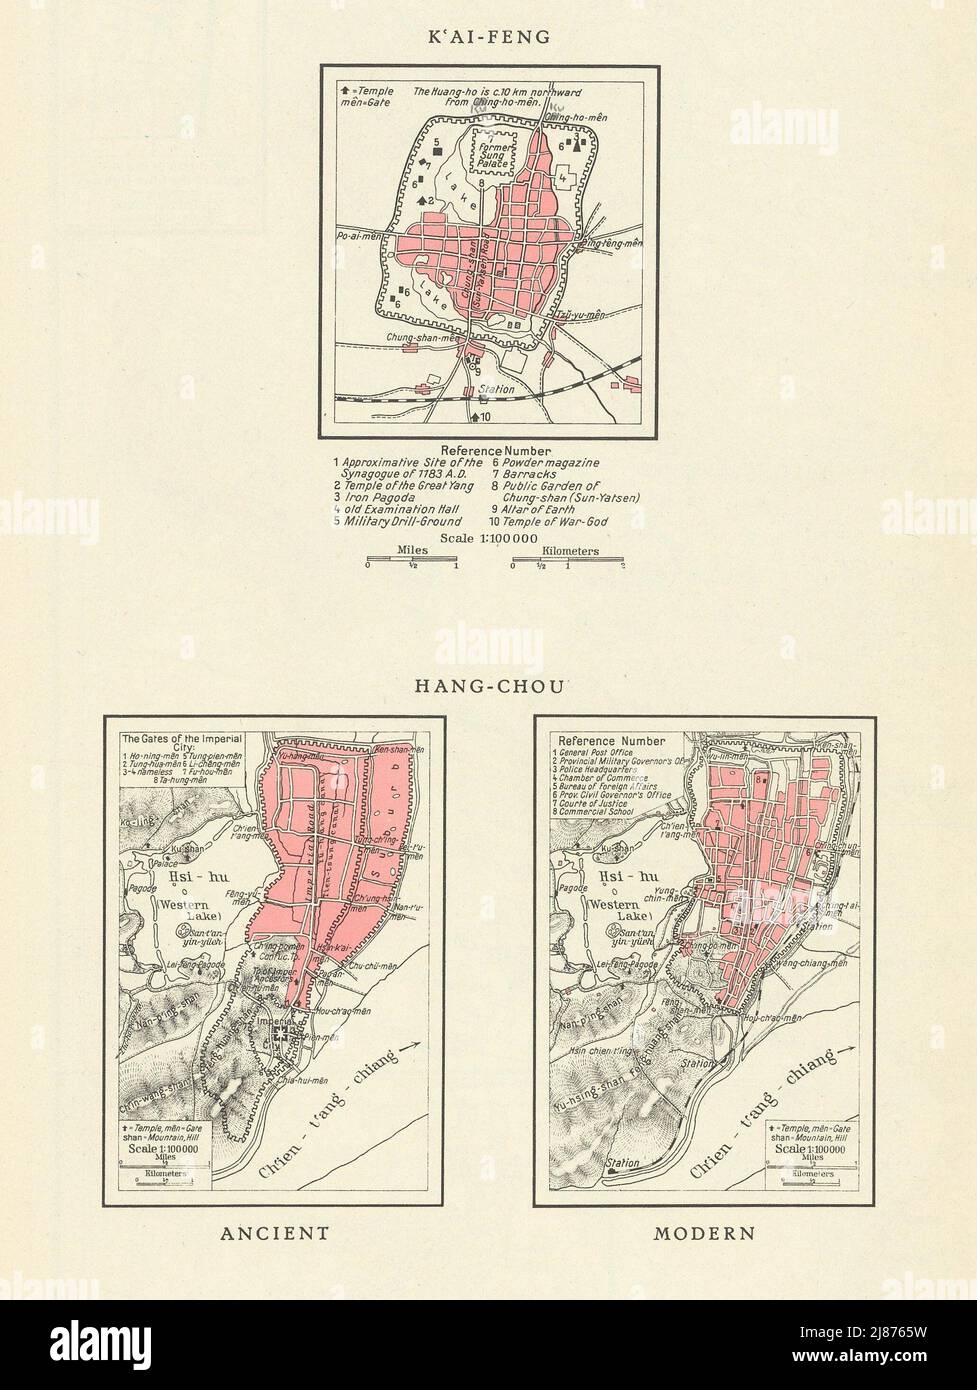 Kaifeng & Hang-Chou Hangzhou ancient & modern city plans, China 1935 old map Stock Photo